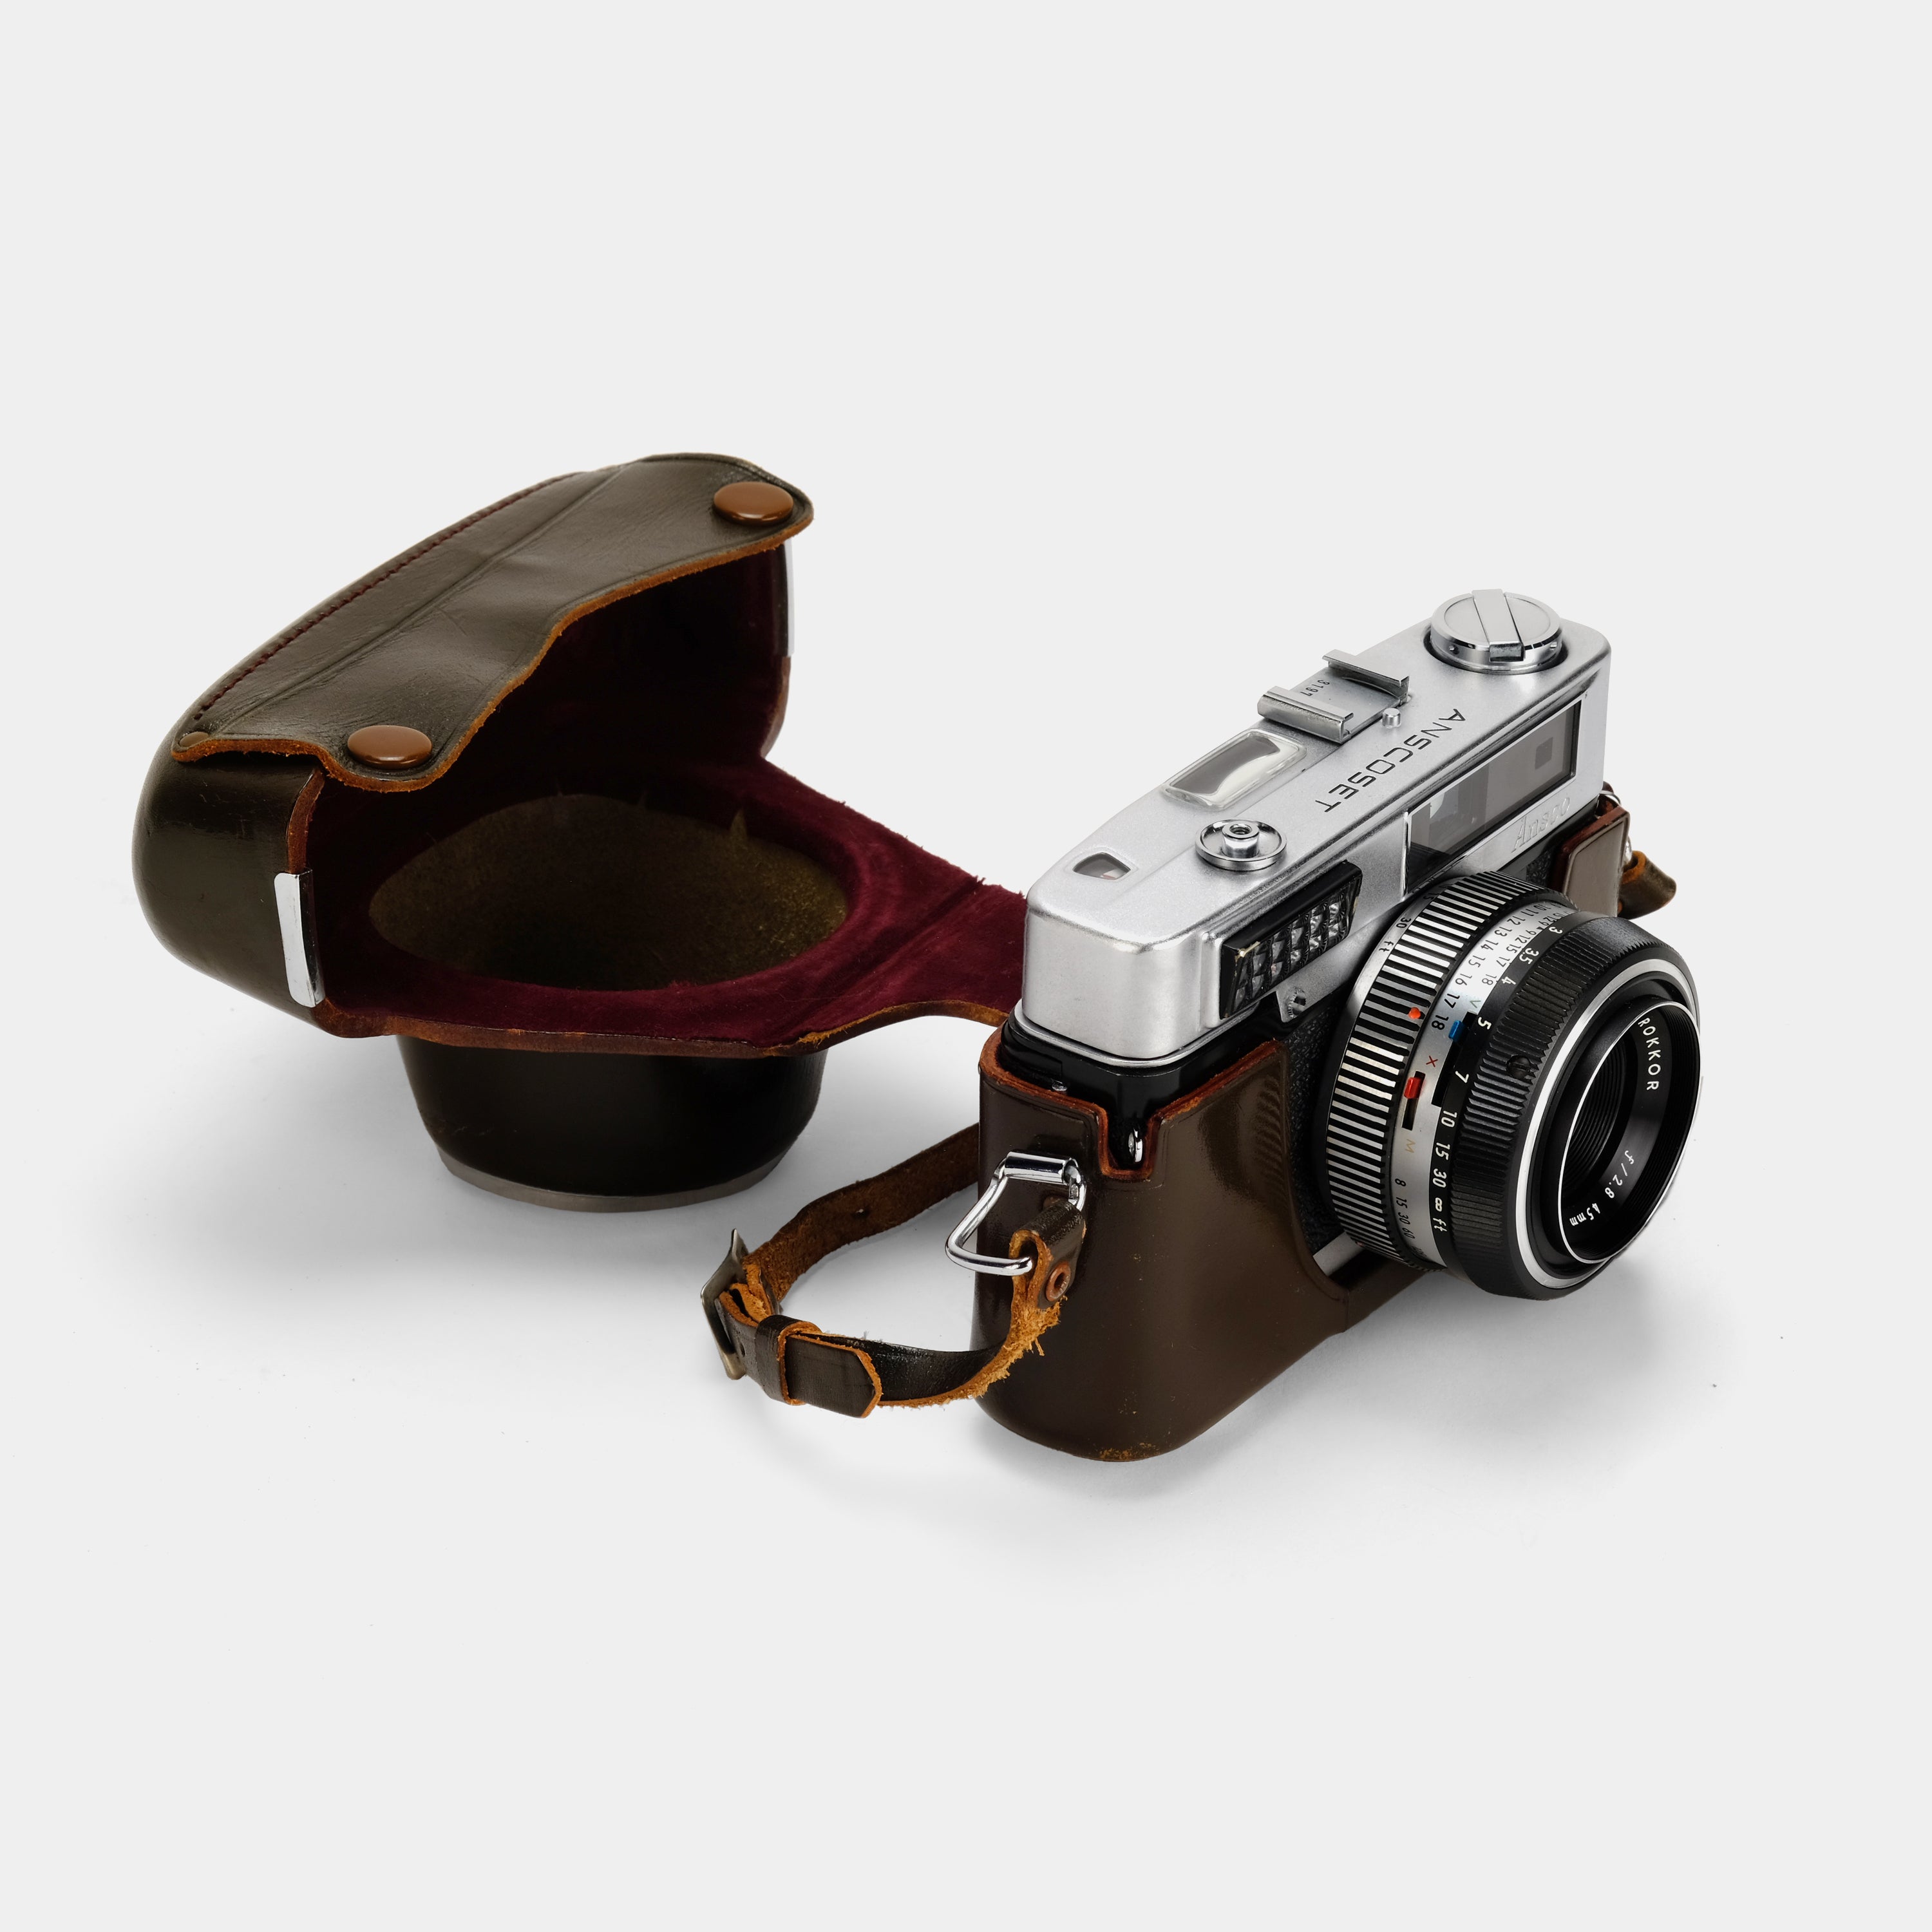 Ansco Anscoset 35mm Rangefinder Film Camera